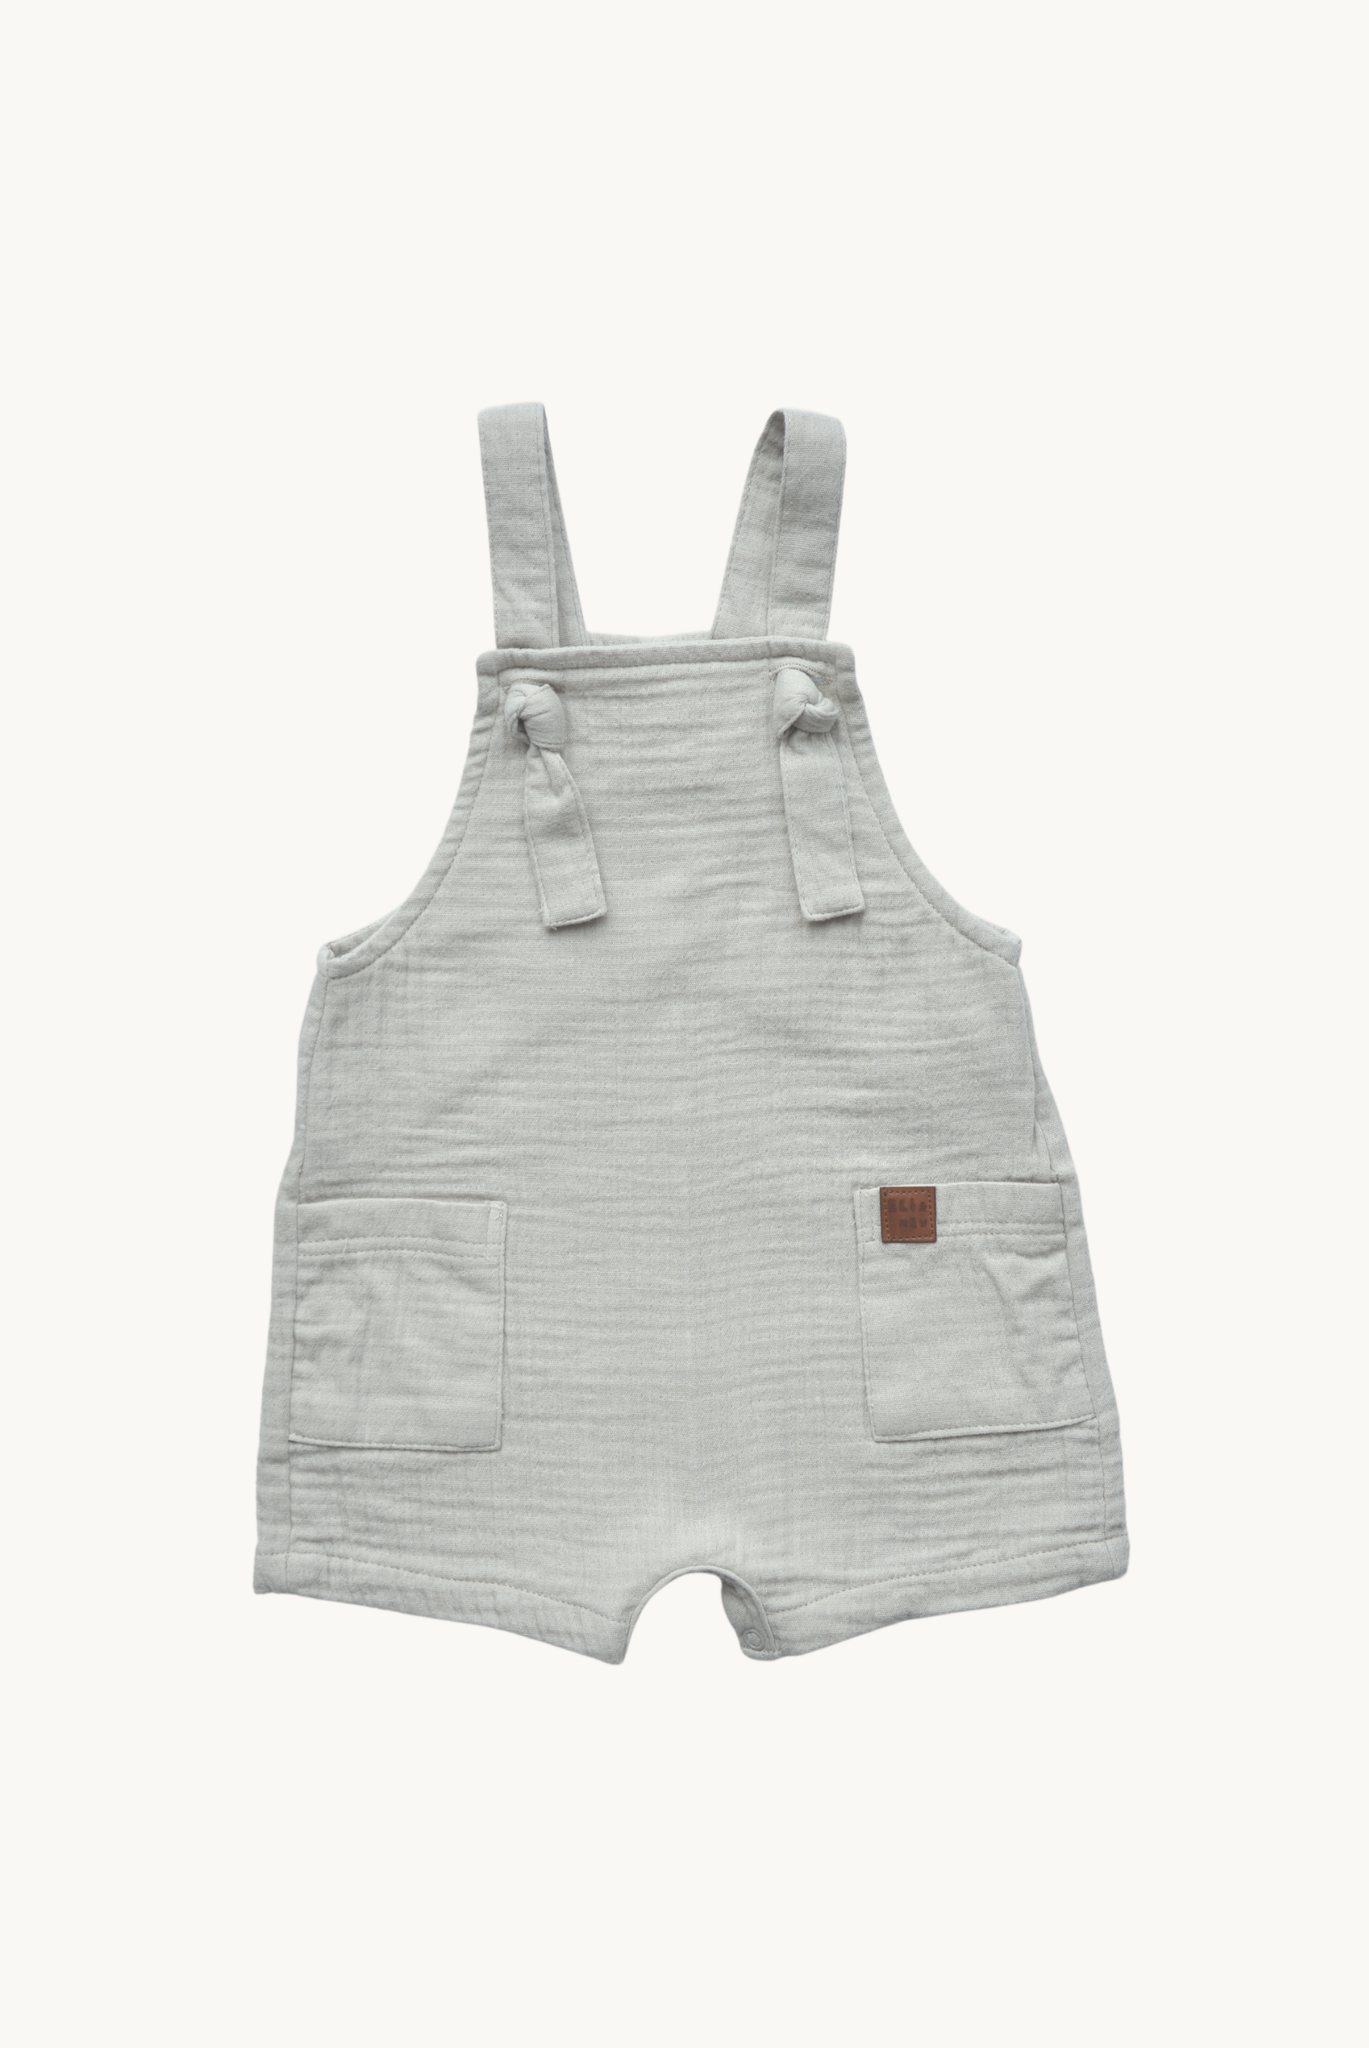 Baby/Kids summer overalls 100% cotton muslin